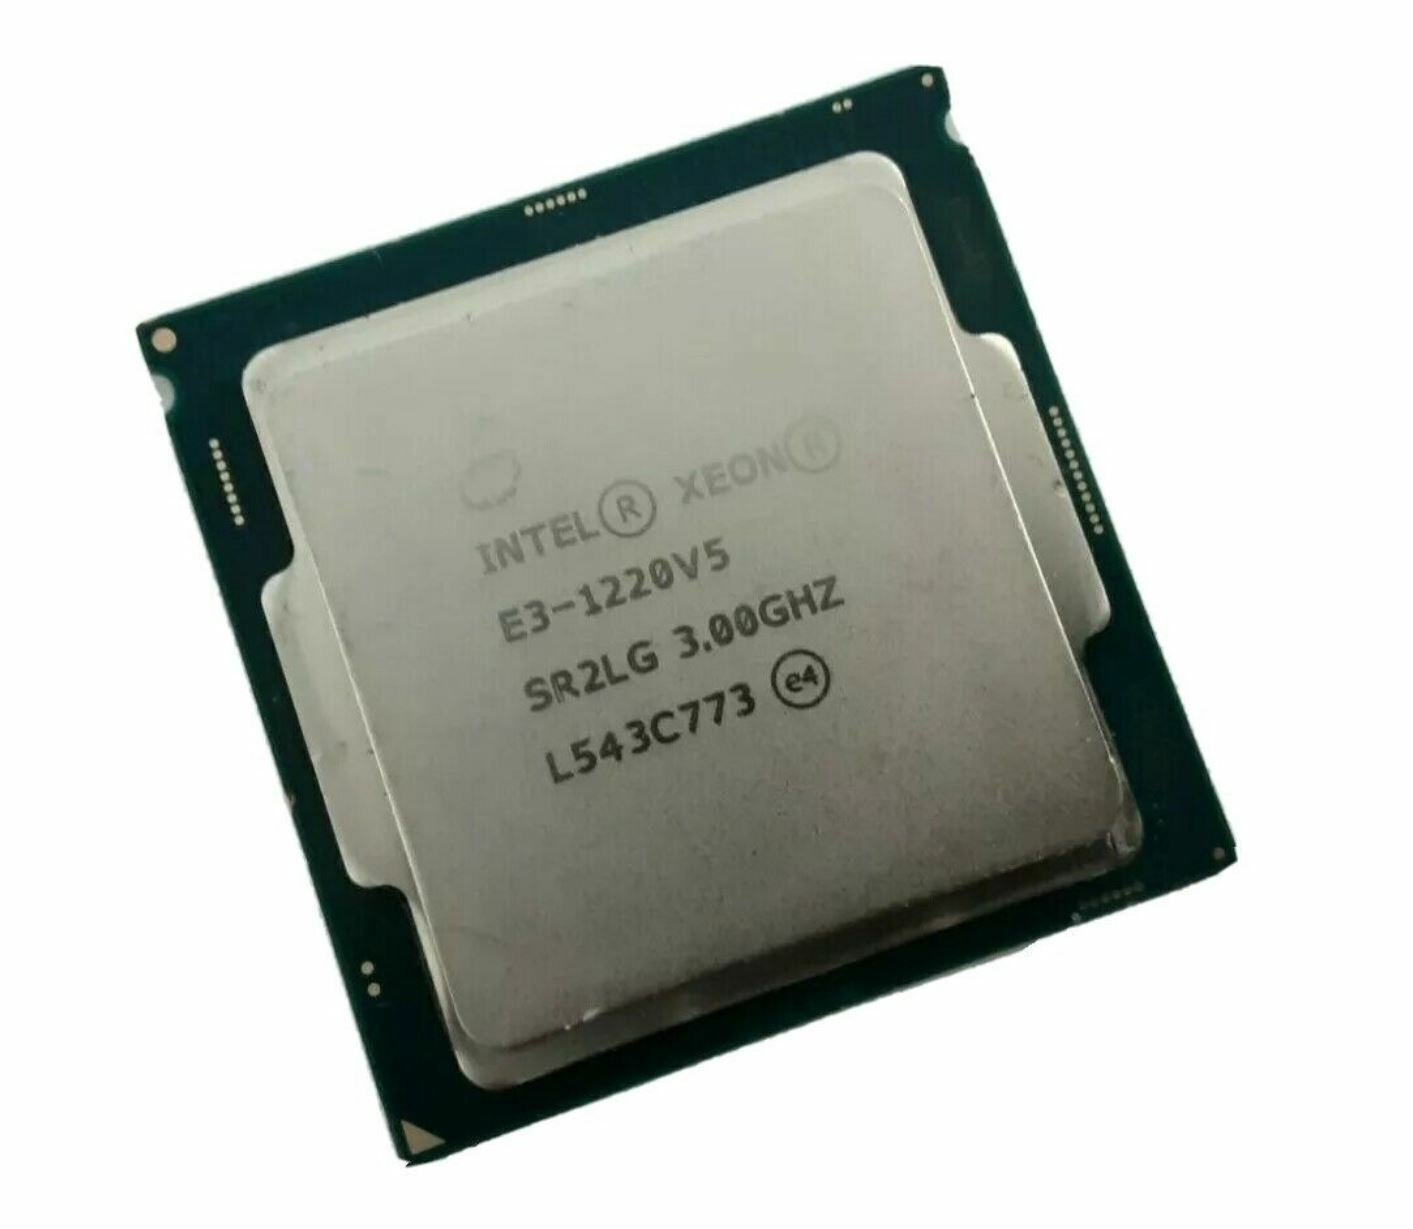 Intel Xeon E3-1200 V5 E3-1220 V5 Quad-Core (4 Core) 3 Ghz Processor - Oem Pack